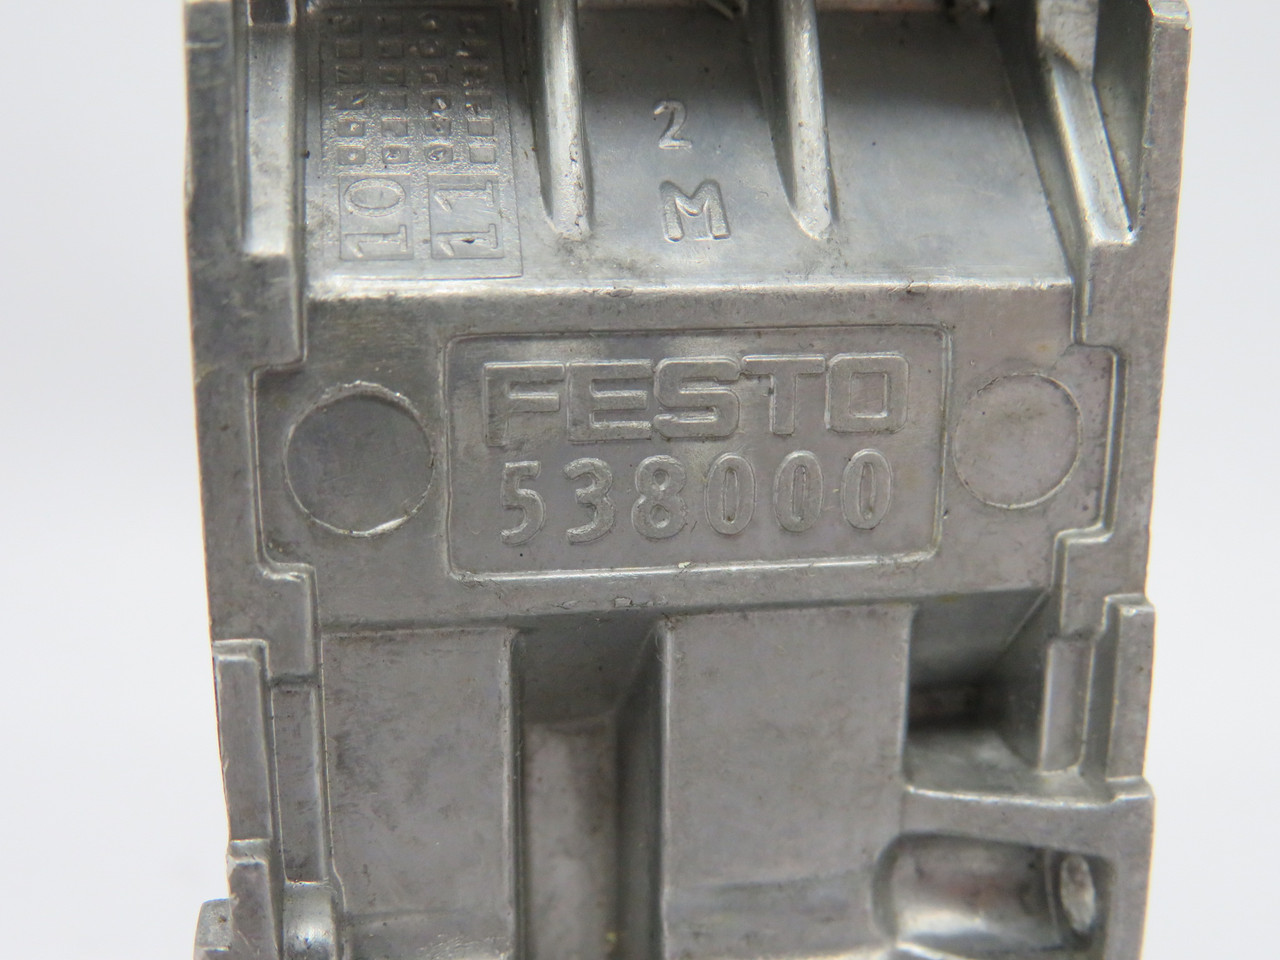 Festo 538000 VMPA2-FB-AP-2-1 6mm Fitting Sub Base for Valve USED